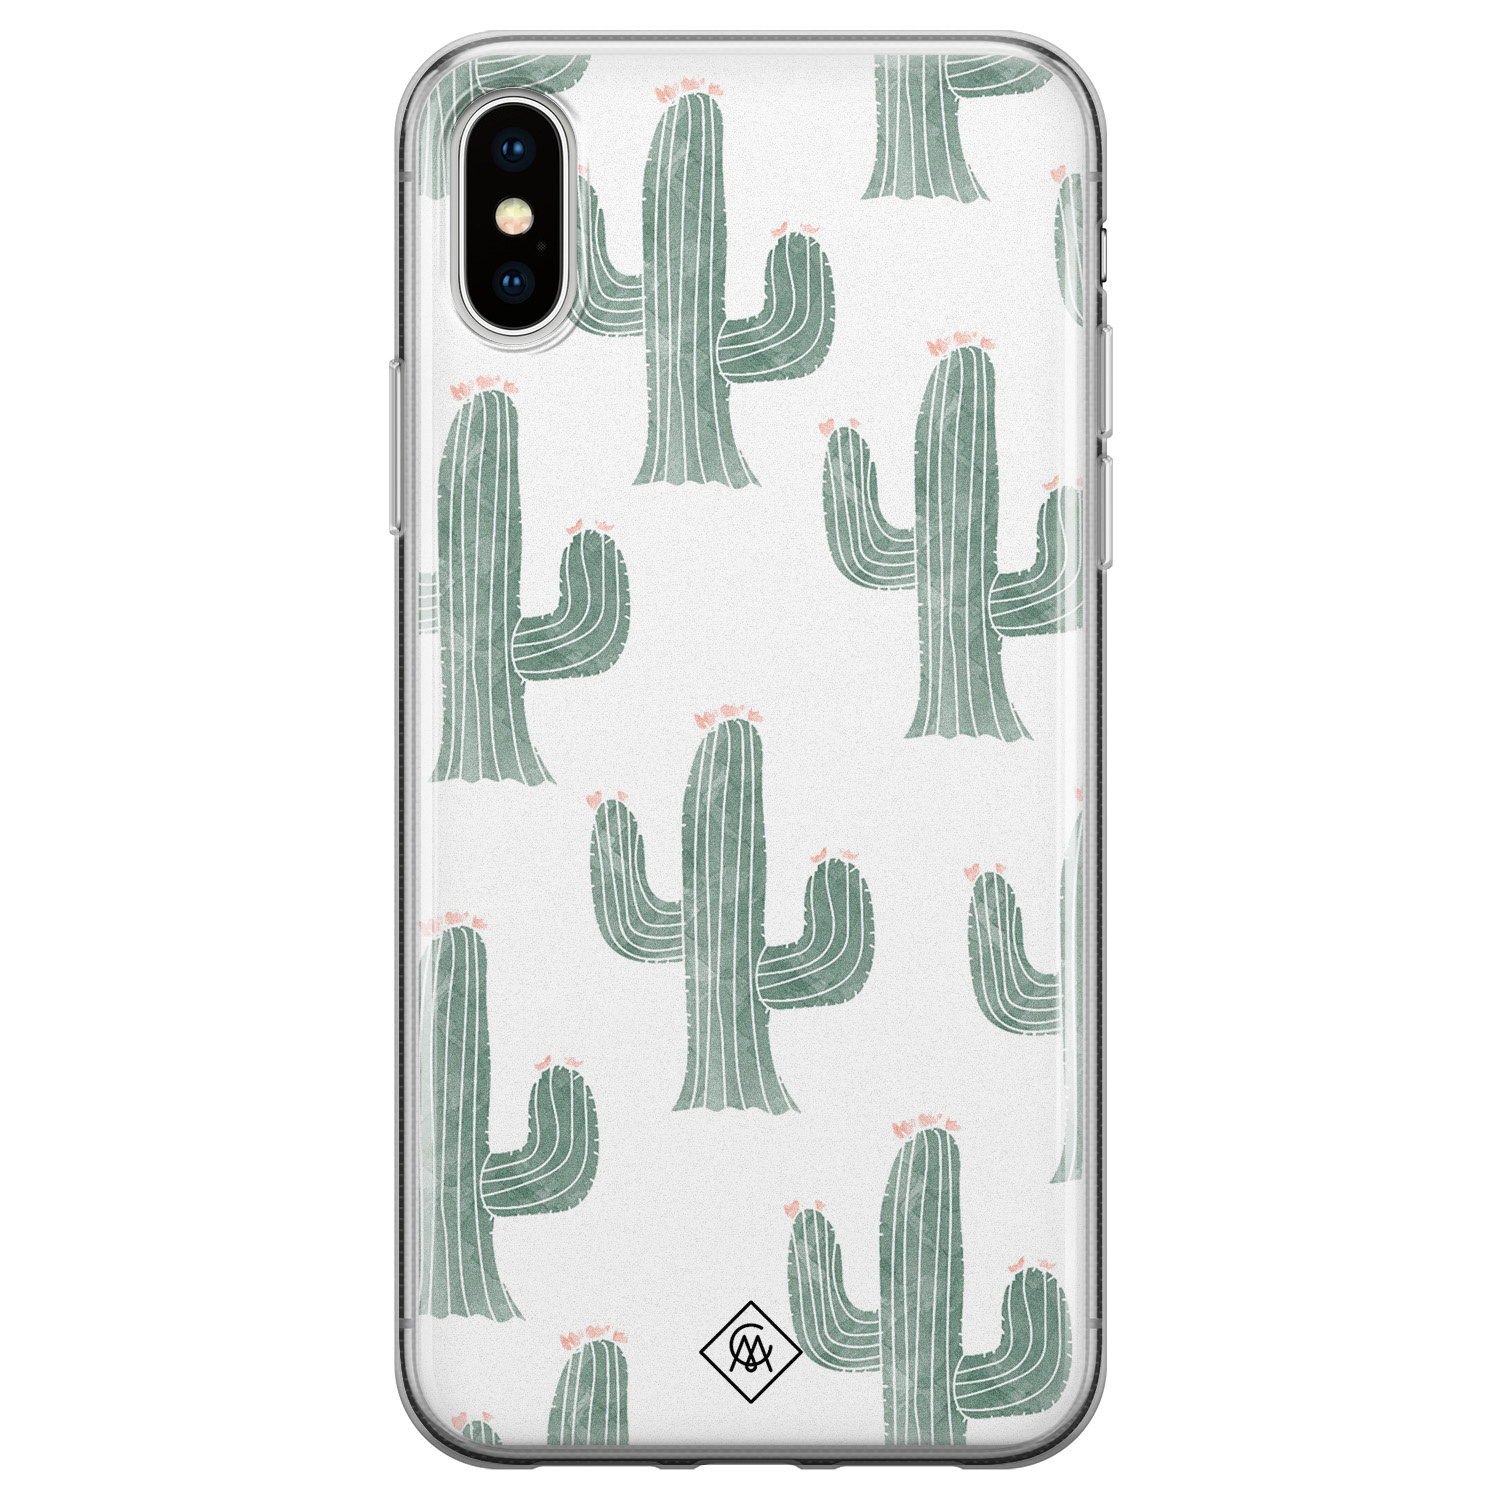 Simuleren zonsopkomst Jeugd iPhone X/XS siliconen telefoonhoesje - Cactus print - Casimoda.nl